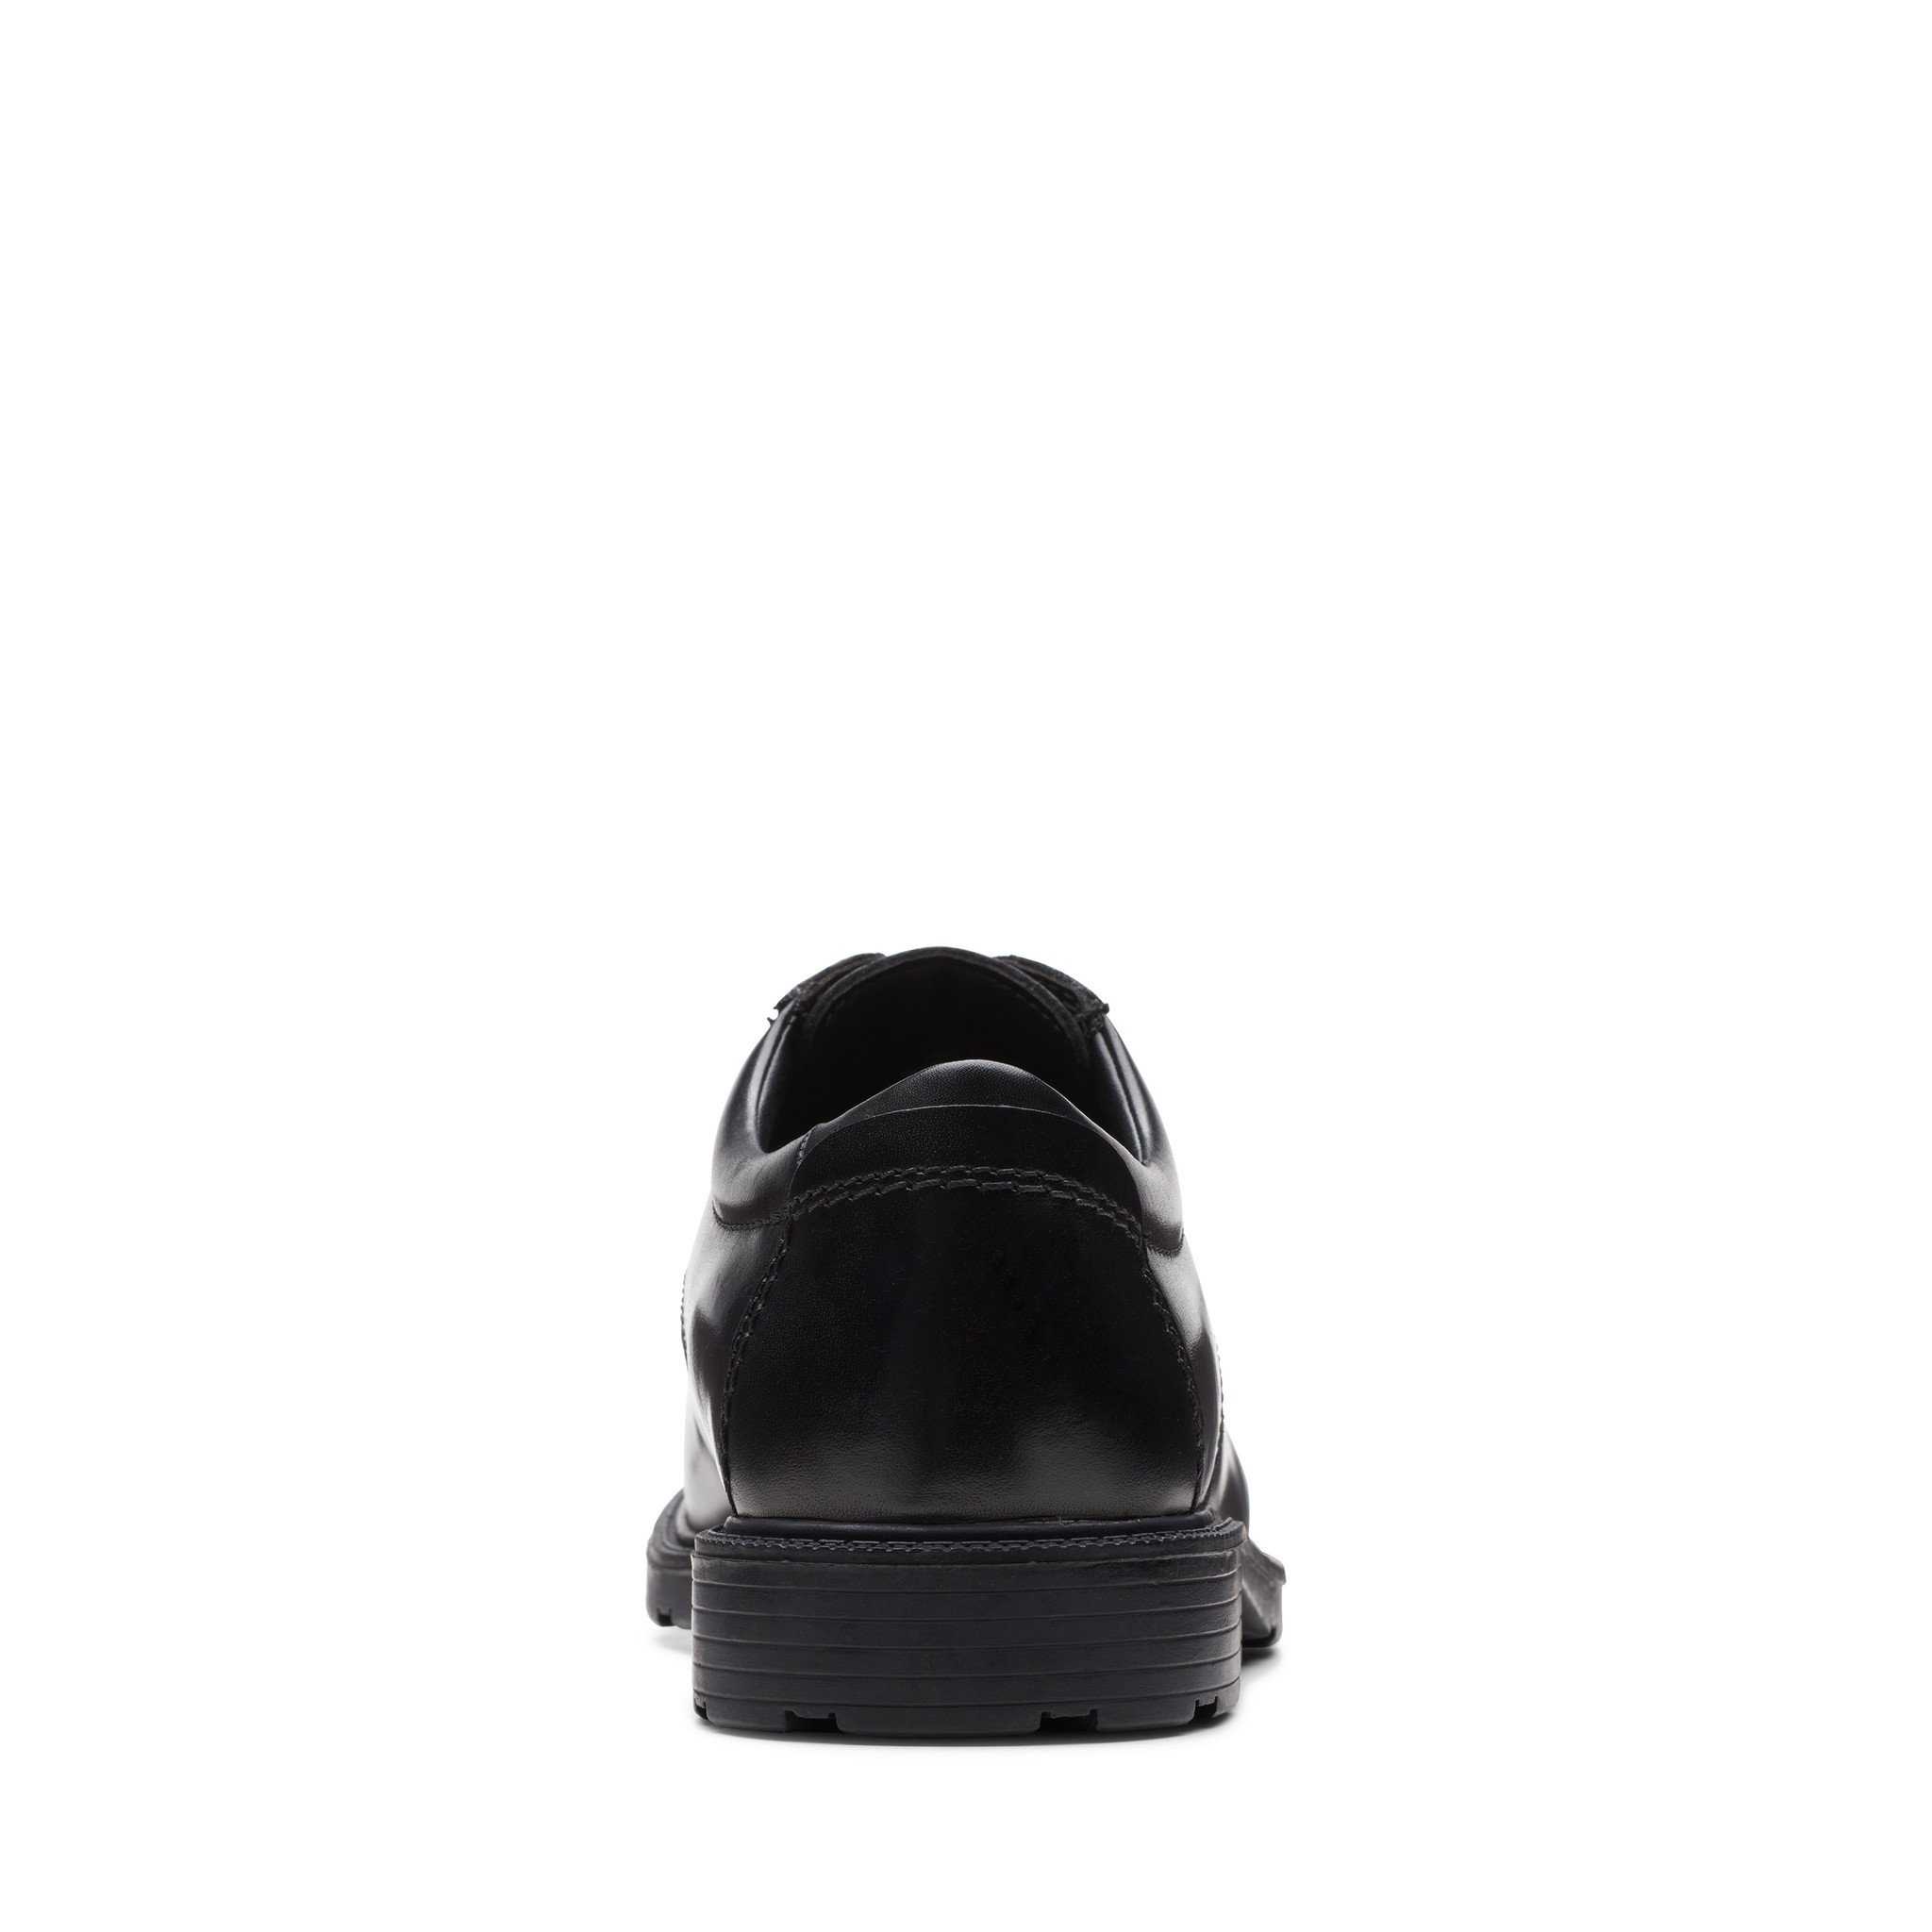 Clarks Boys/Mens Kerton Lace Black Leather - Shoes for Children